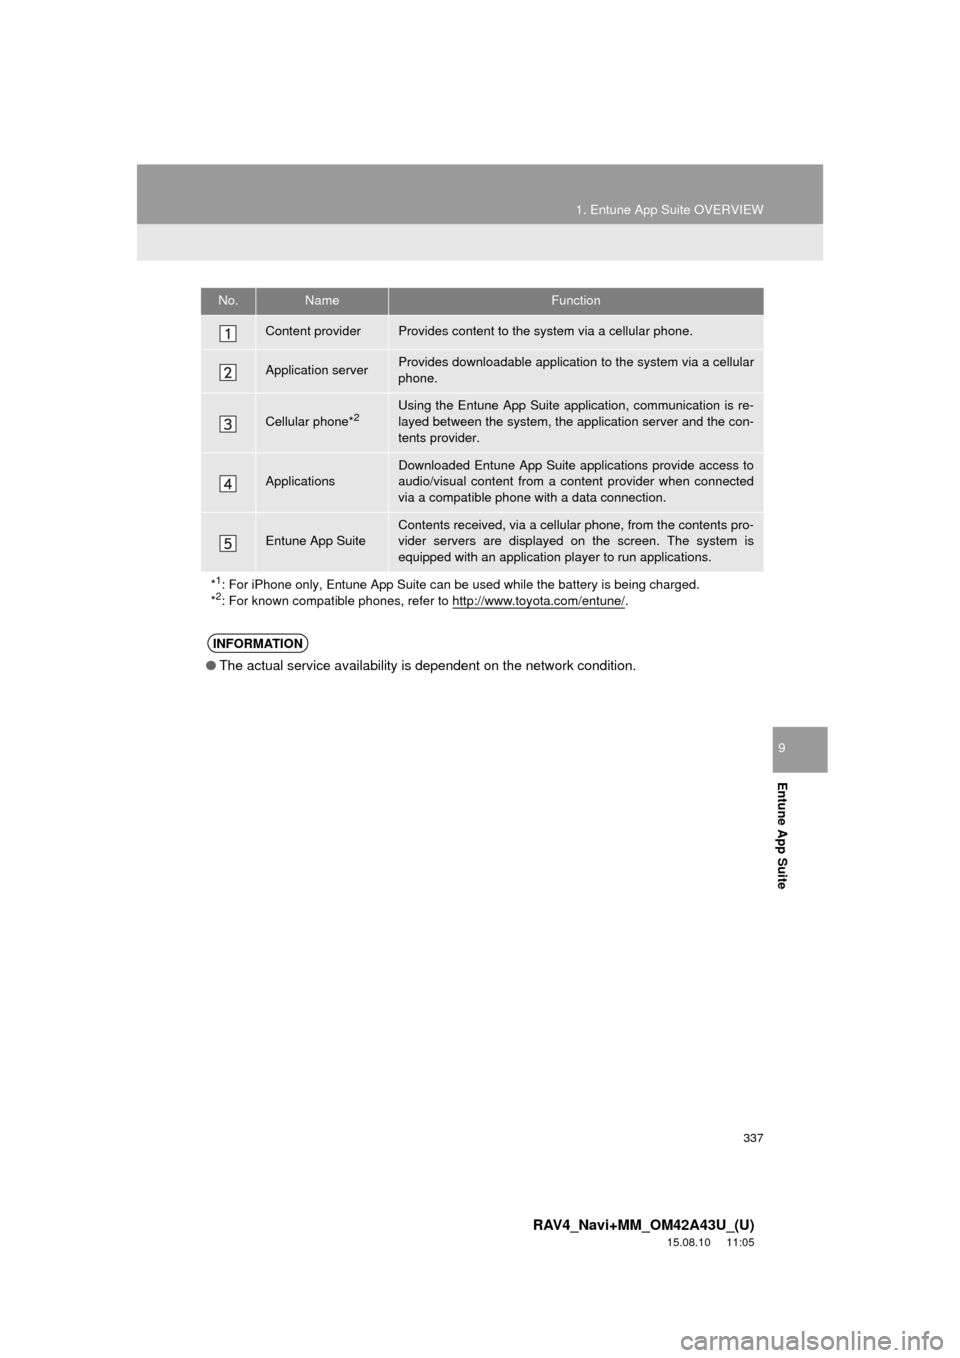 TOYOTA RAV4 2016 XA40 / 4.G Navigation Manual 337
1. Entune App Suite OVERVIEW
RAV4_Navi+MM_OM42A43U_(U)
15.08.10     11:05
Entune App Suite
9
No.NameFunction
Content providerProvides content to the system via a cellular phone.
Application server